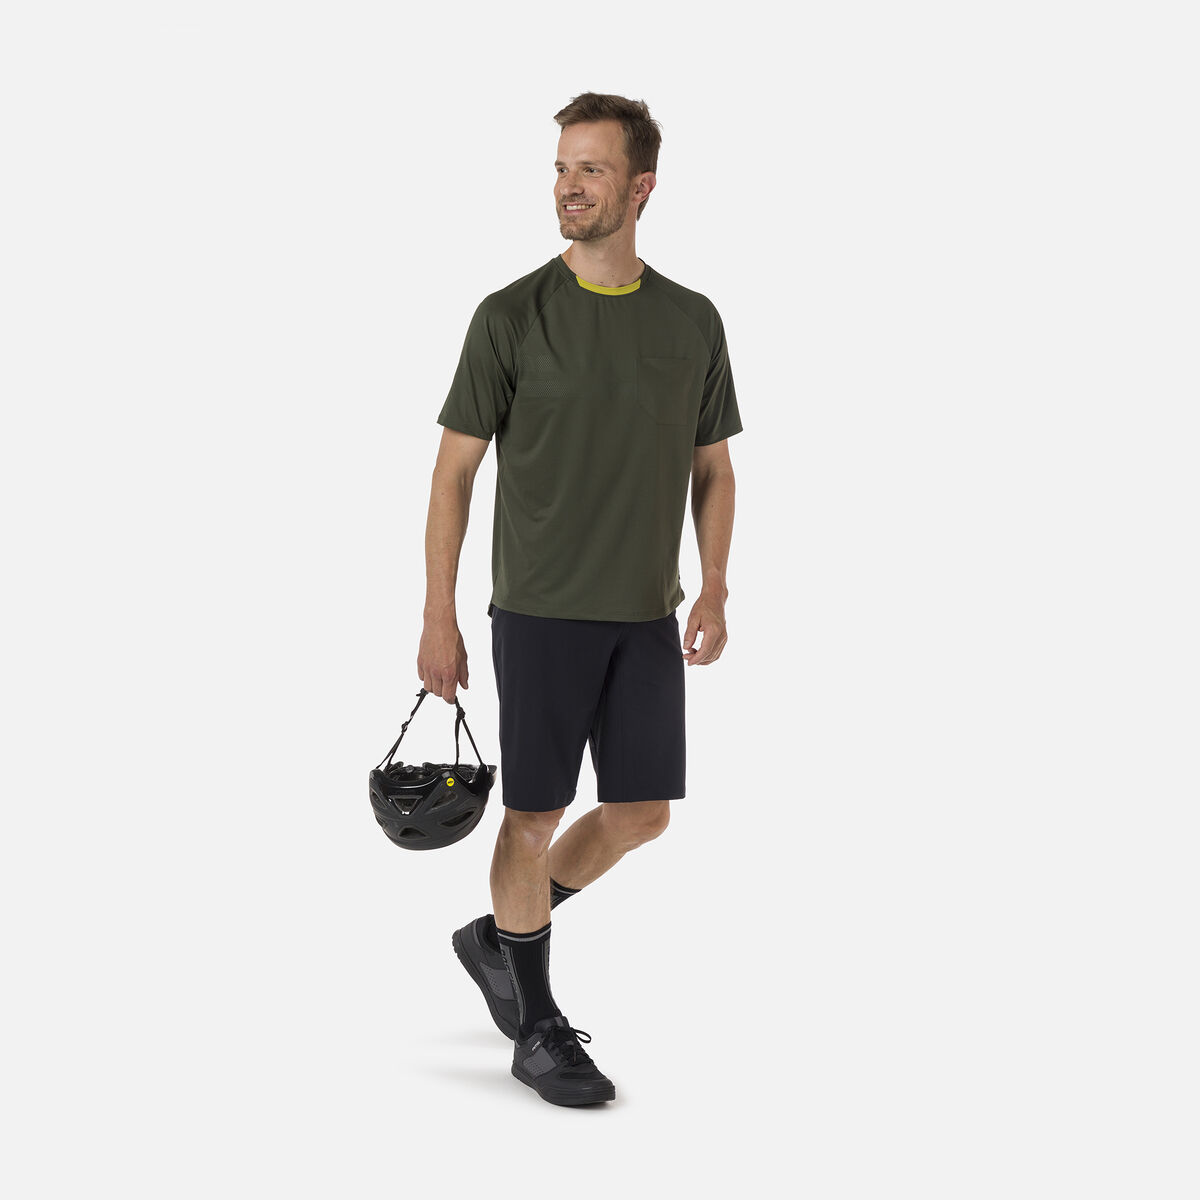 Walking & Hiking Shorts - Lightweight & Breathable